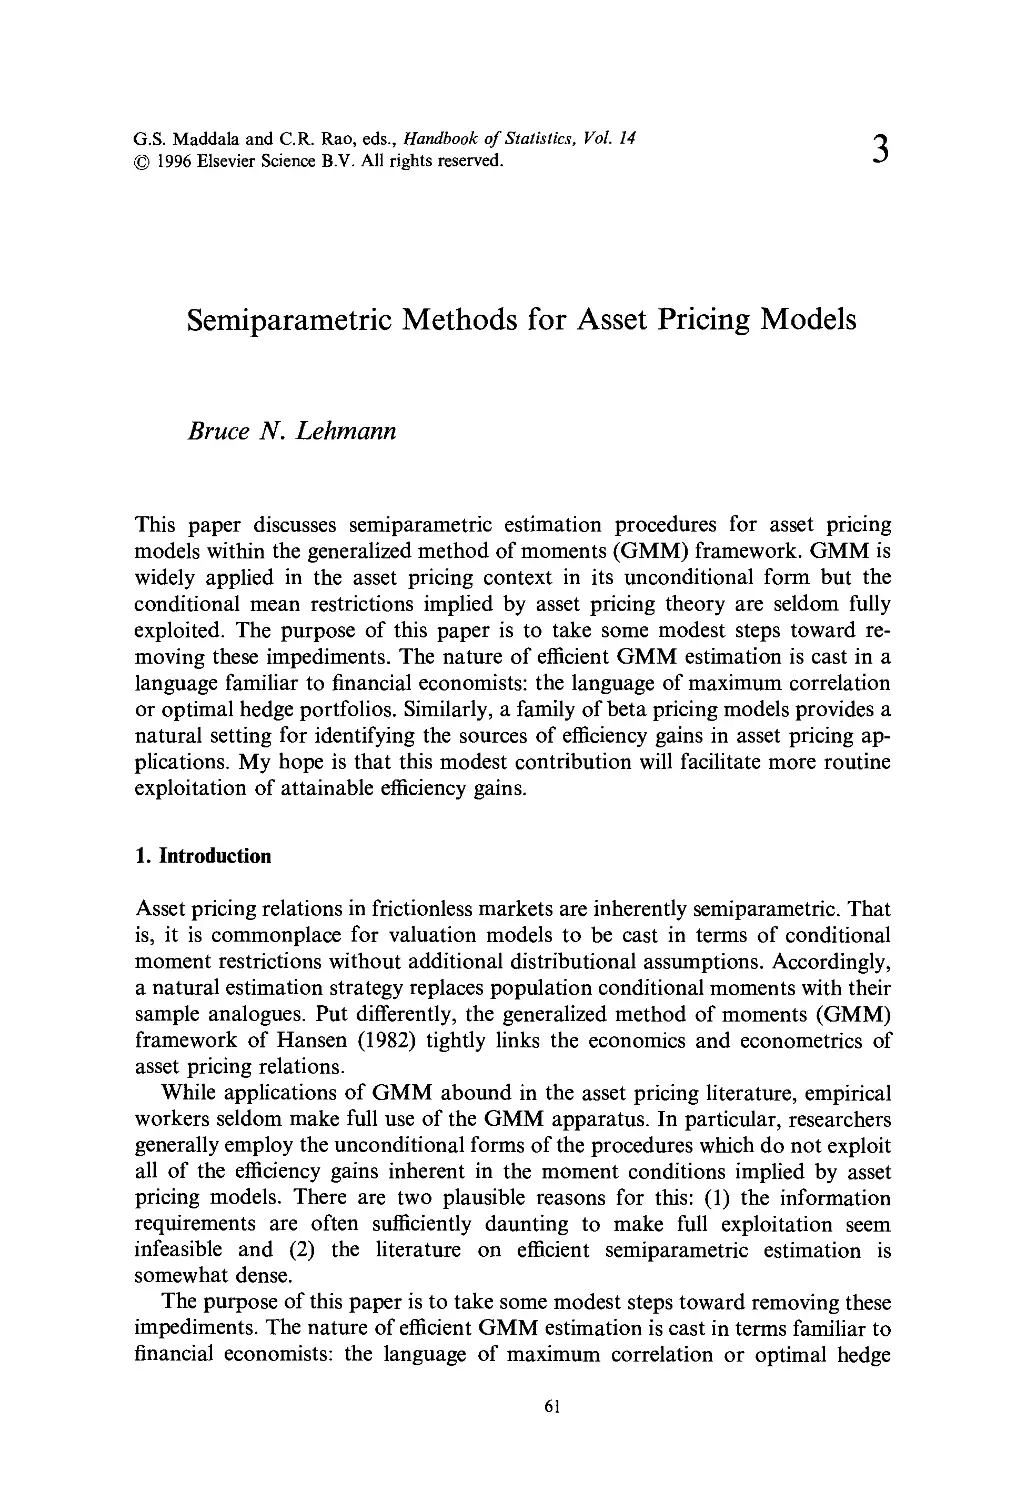 3. Semiparametric Methods for Asset Pricing Models